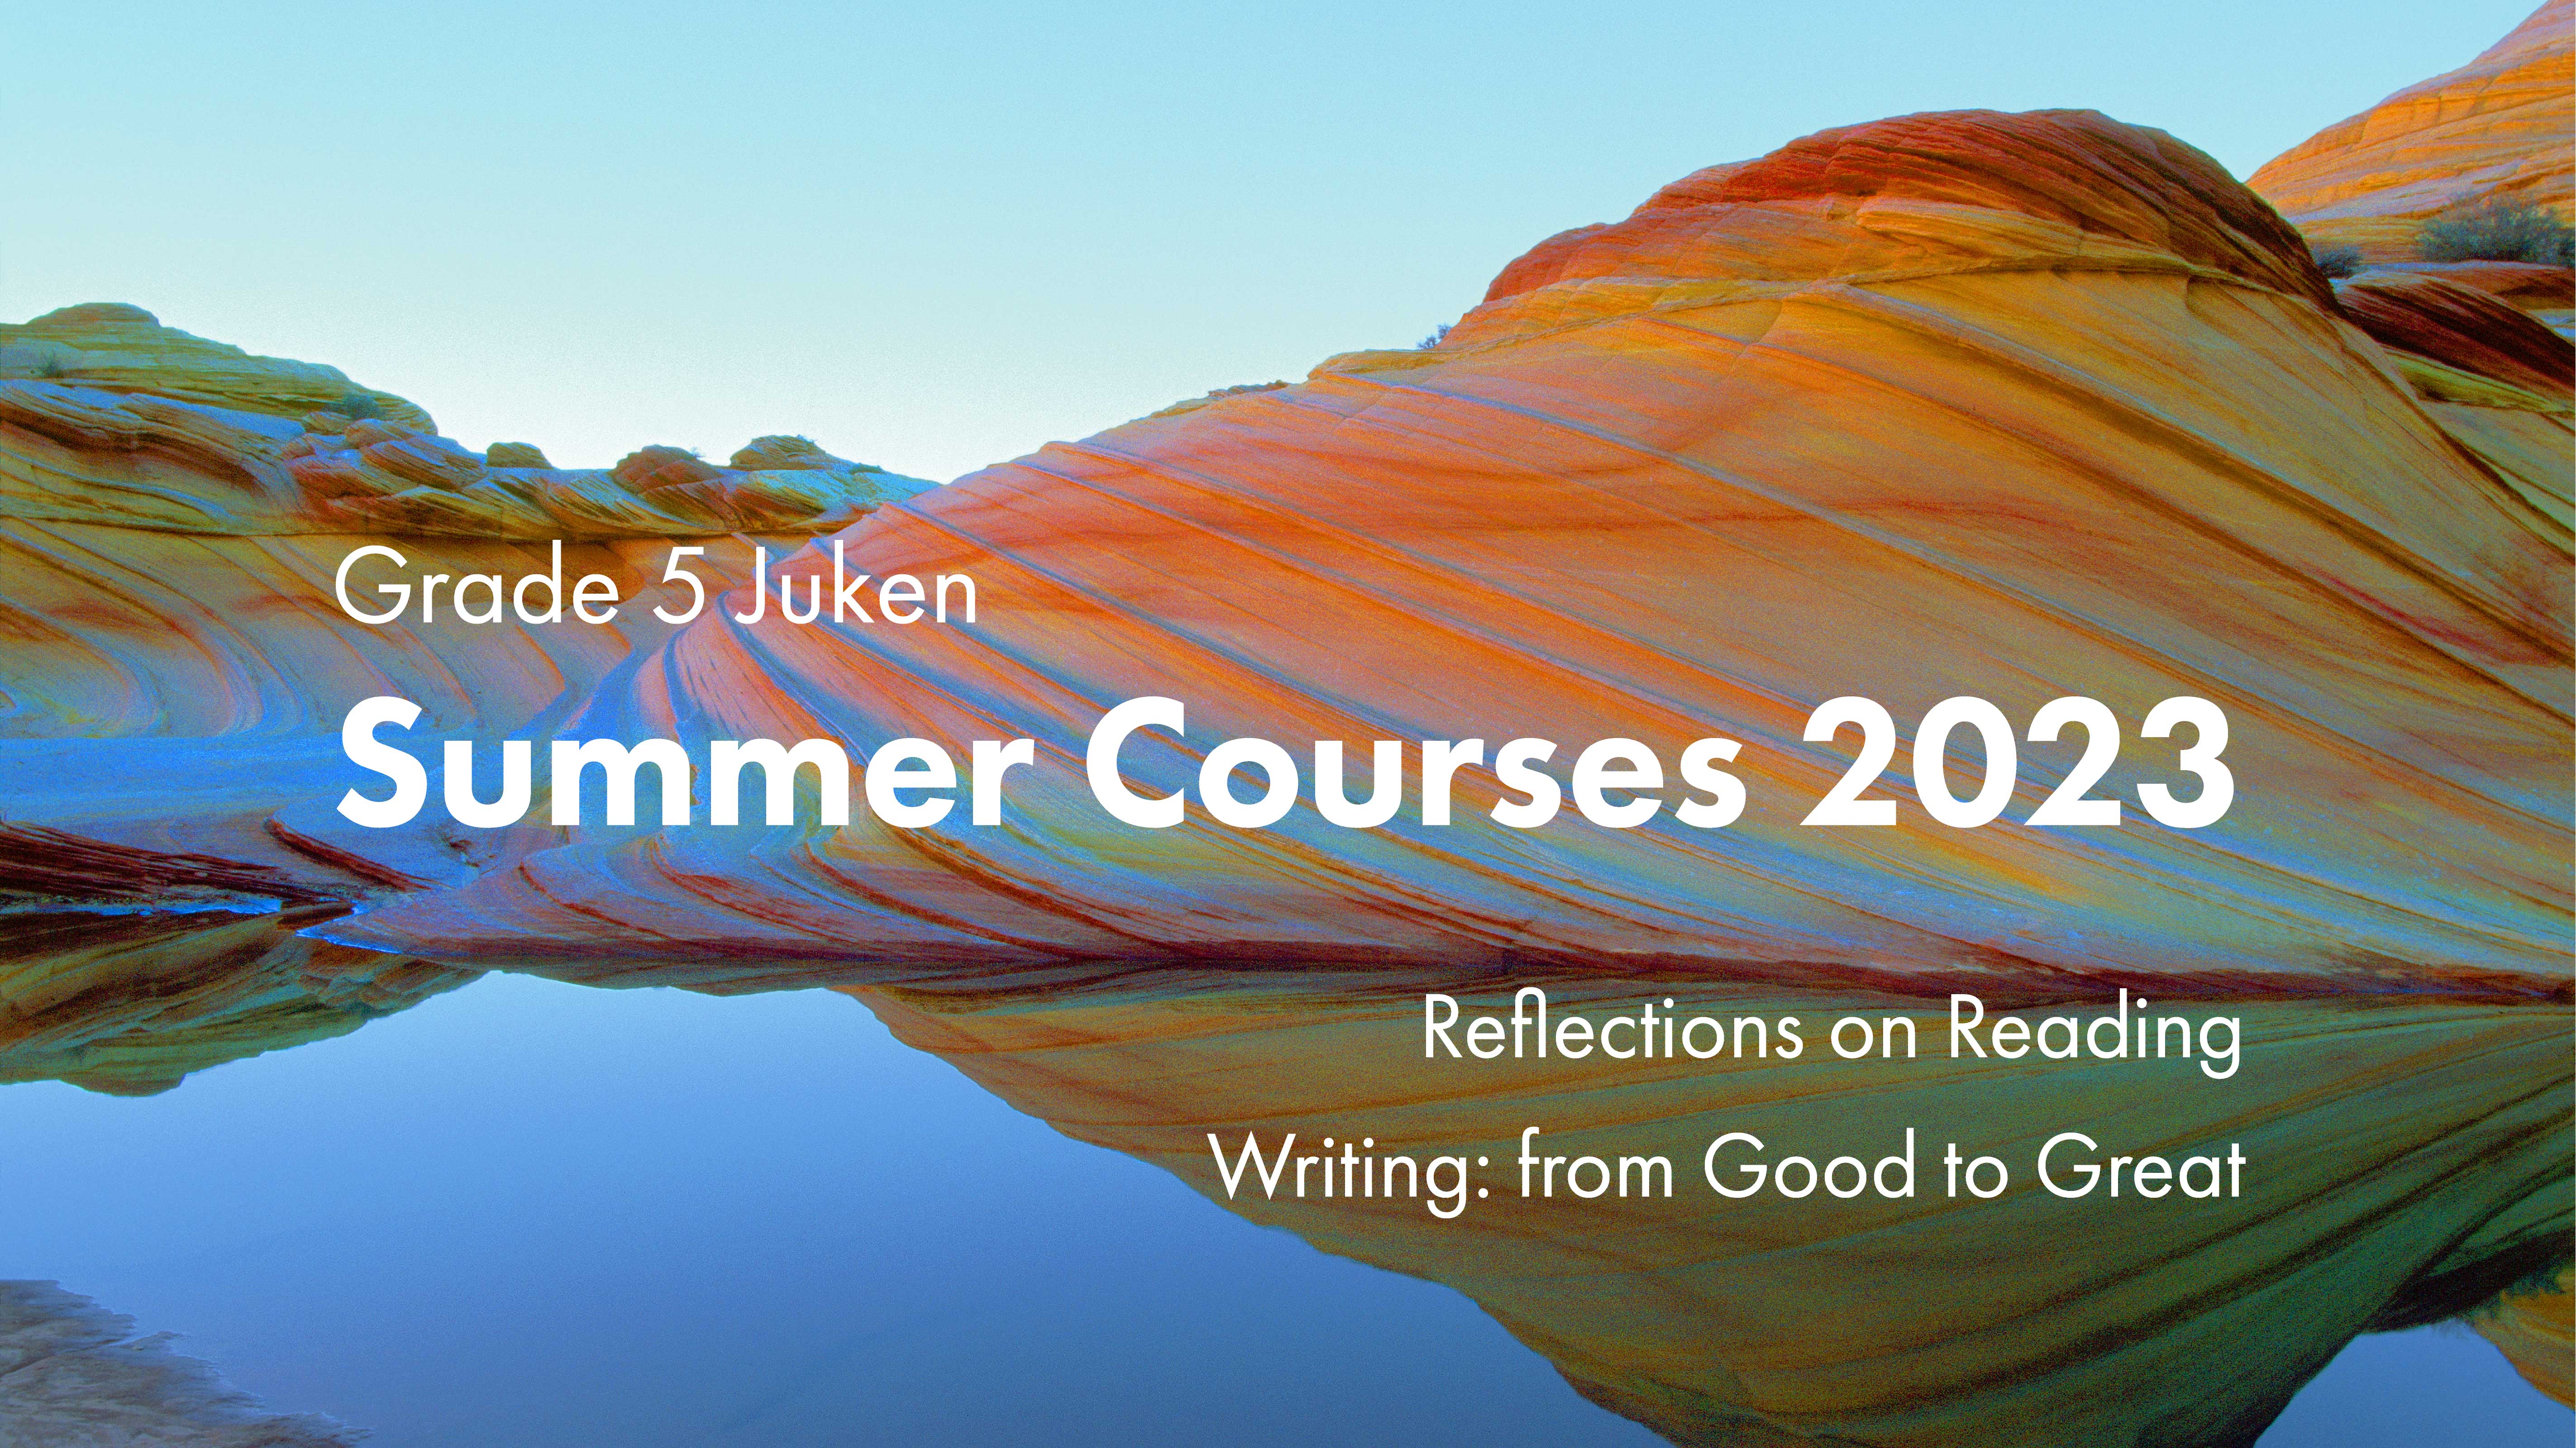 Grade 5 Juken: Summer Courses 2023